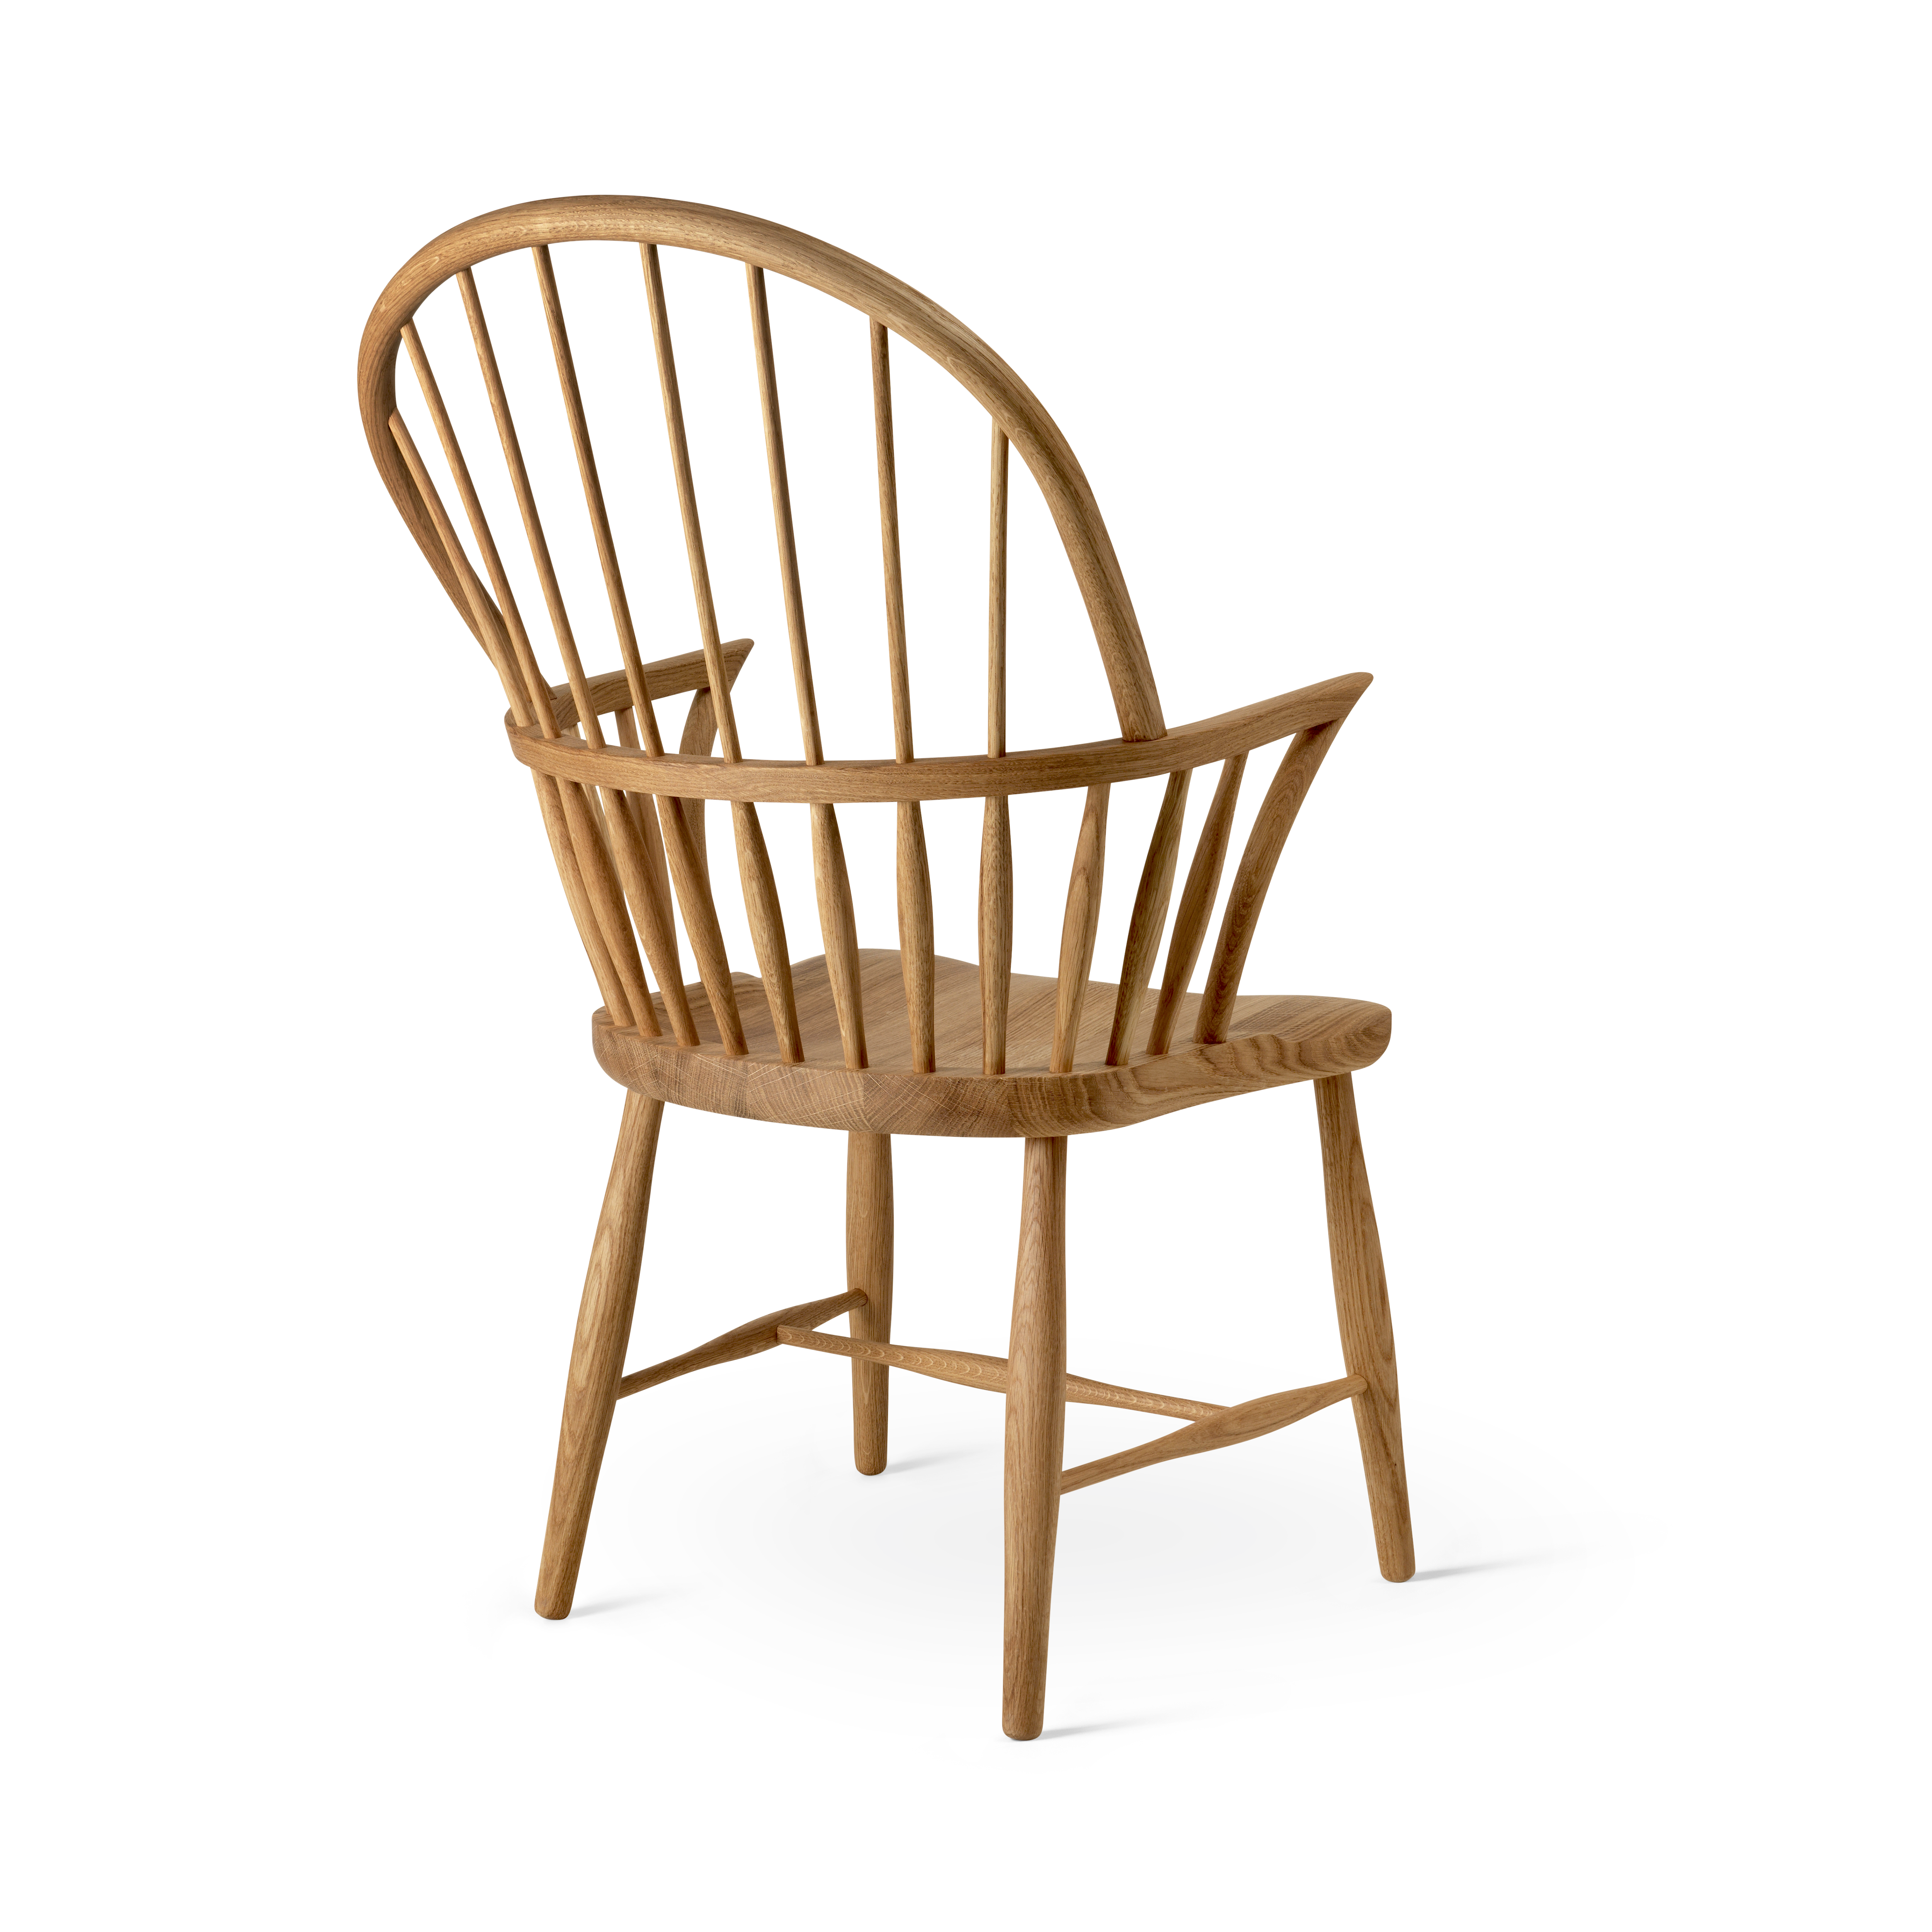 FH38 | Chair designed by Frits Henningsen | Carl Hansen & Søn